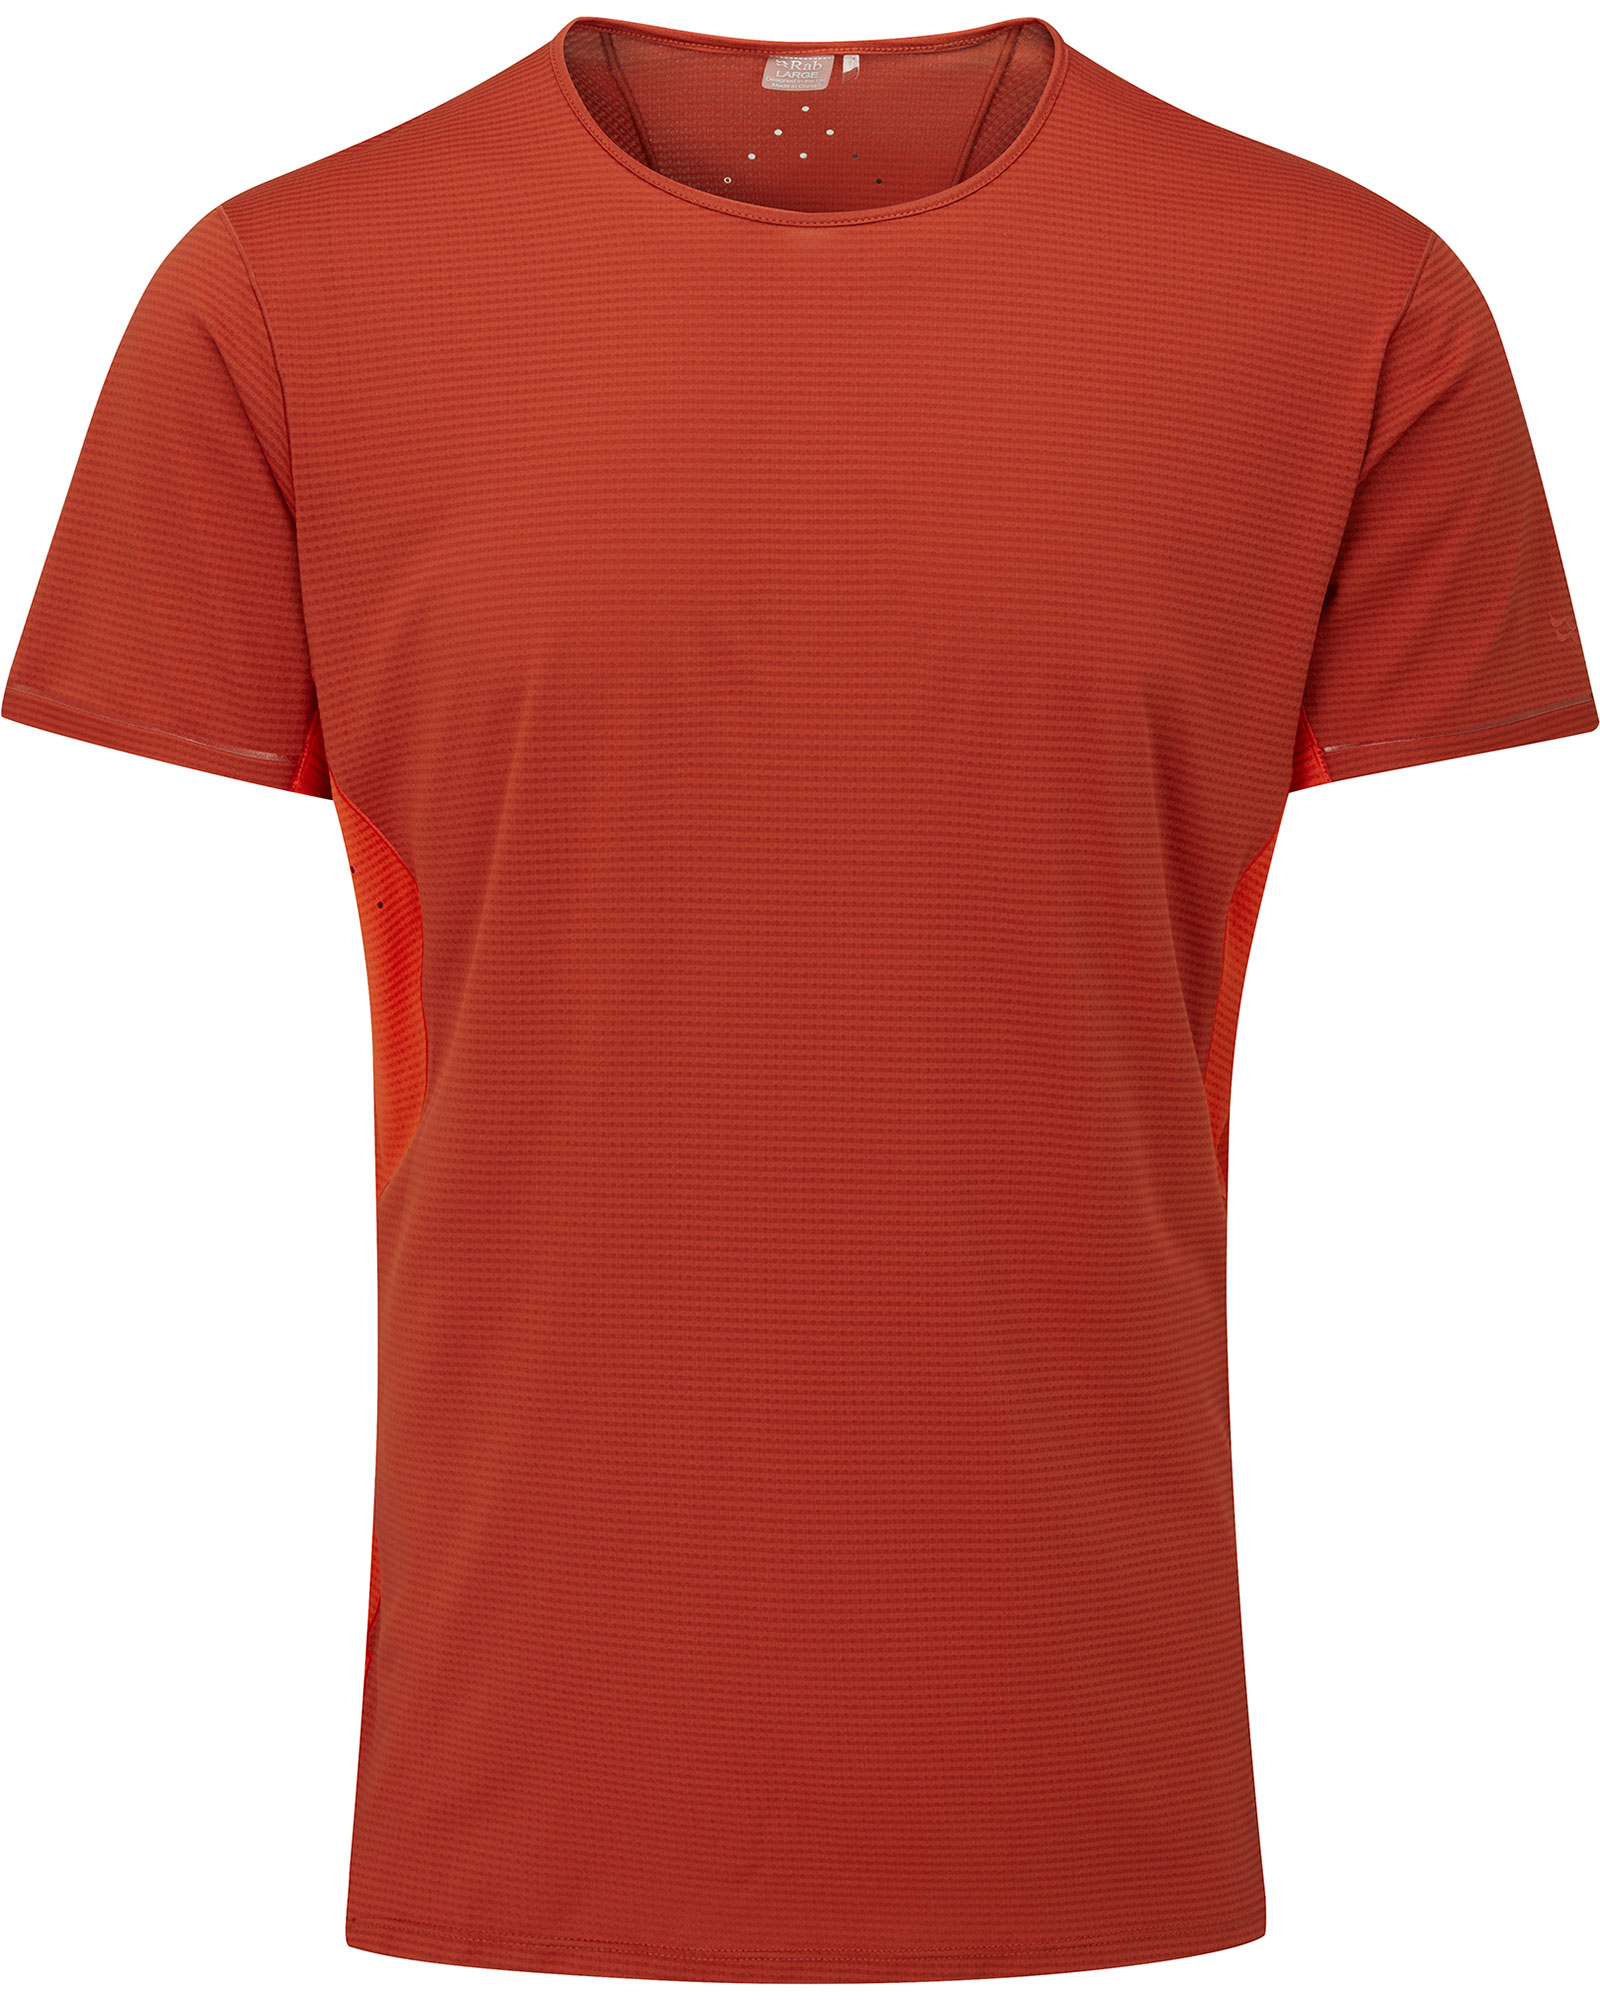 Rab Sonic Ultra Men’s T Shirt - Red Clay S